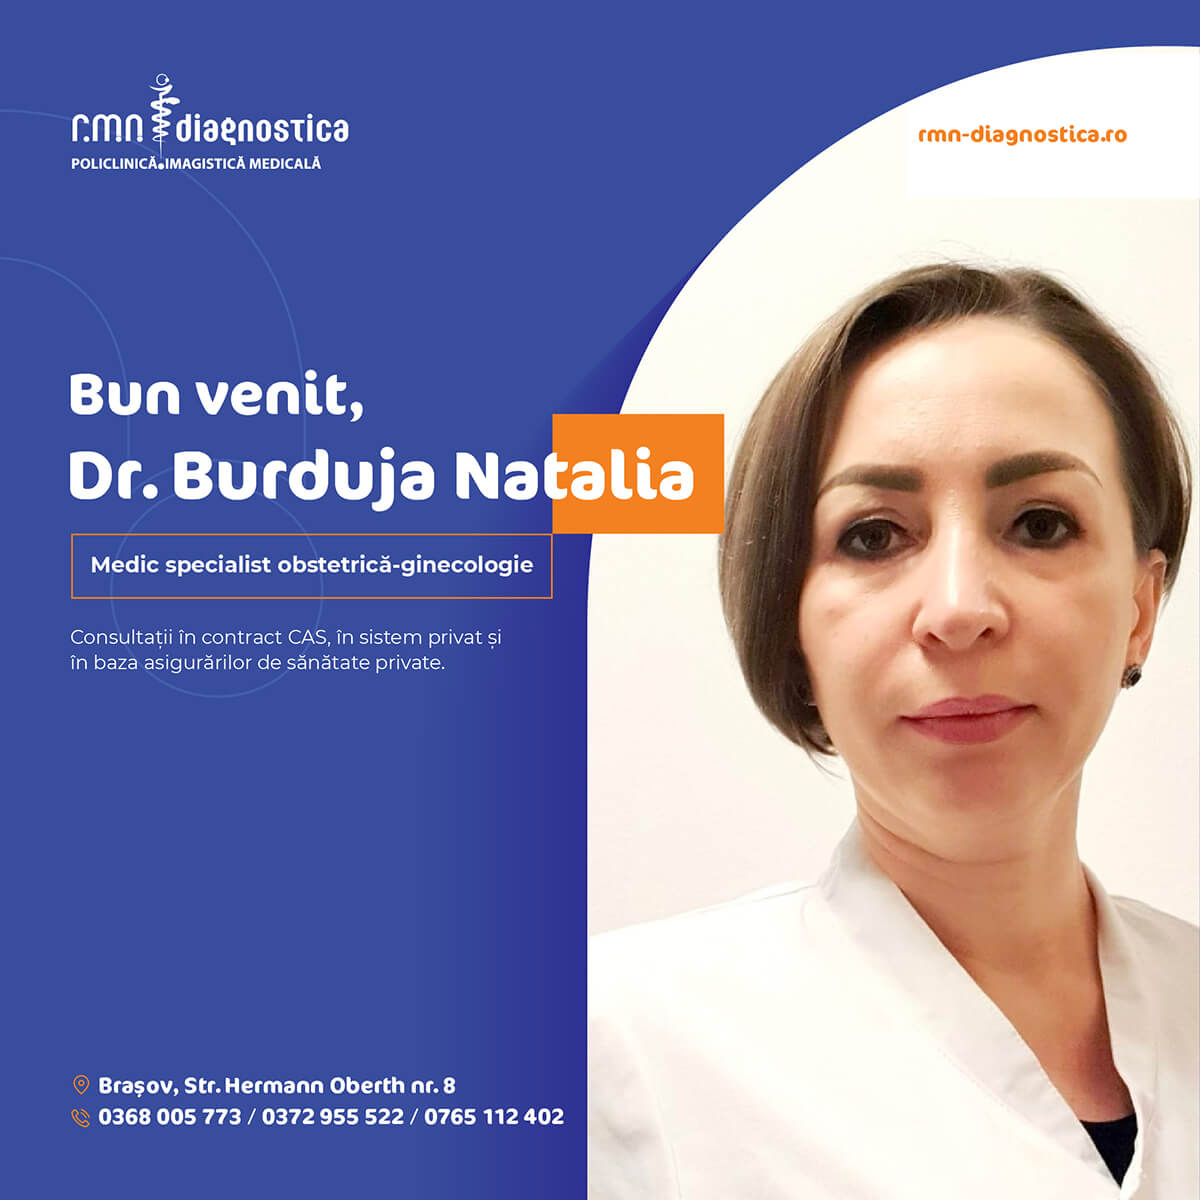 Bun venit, dr. Natalia Burduja!